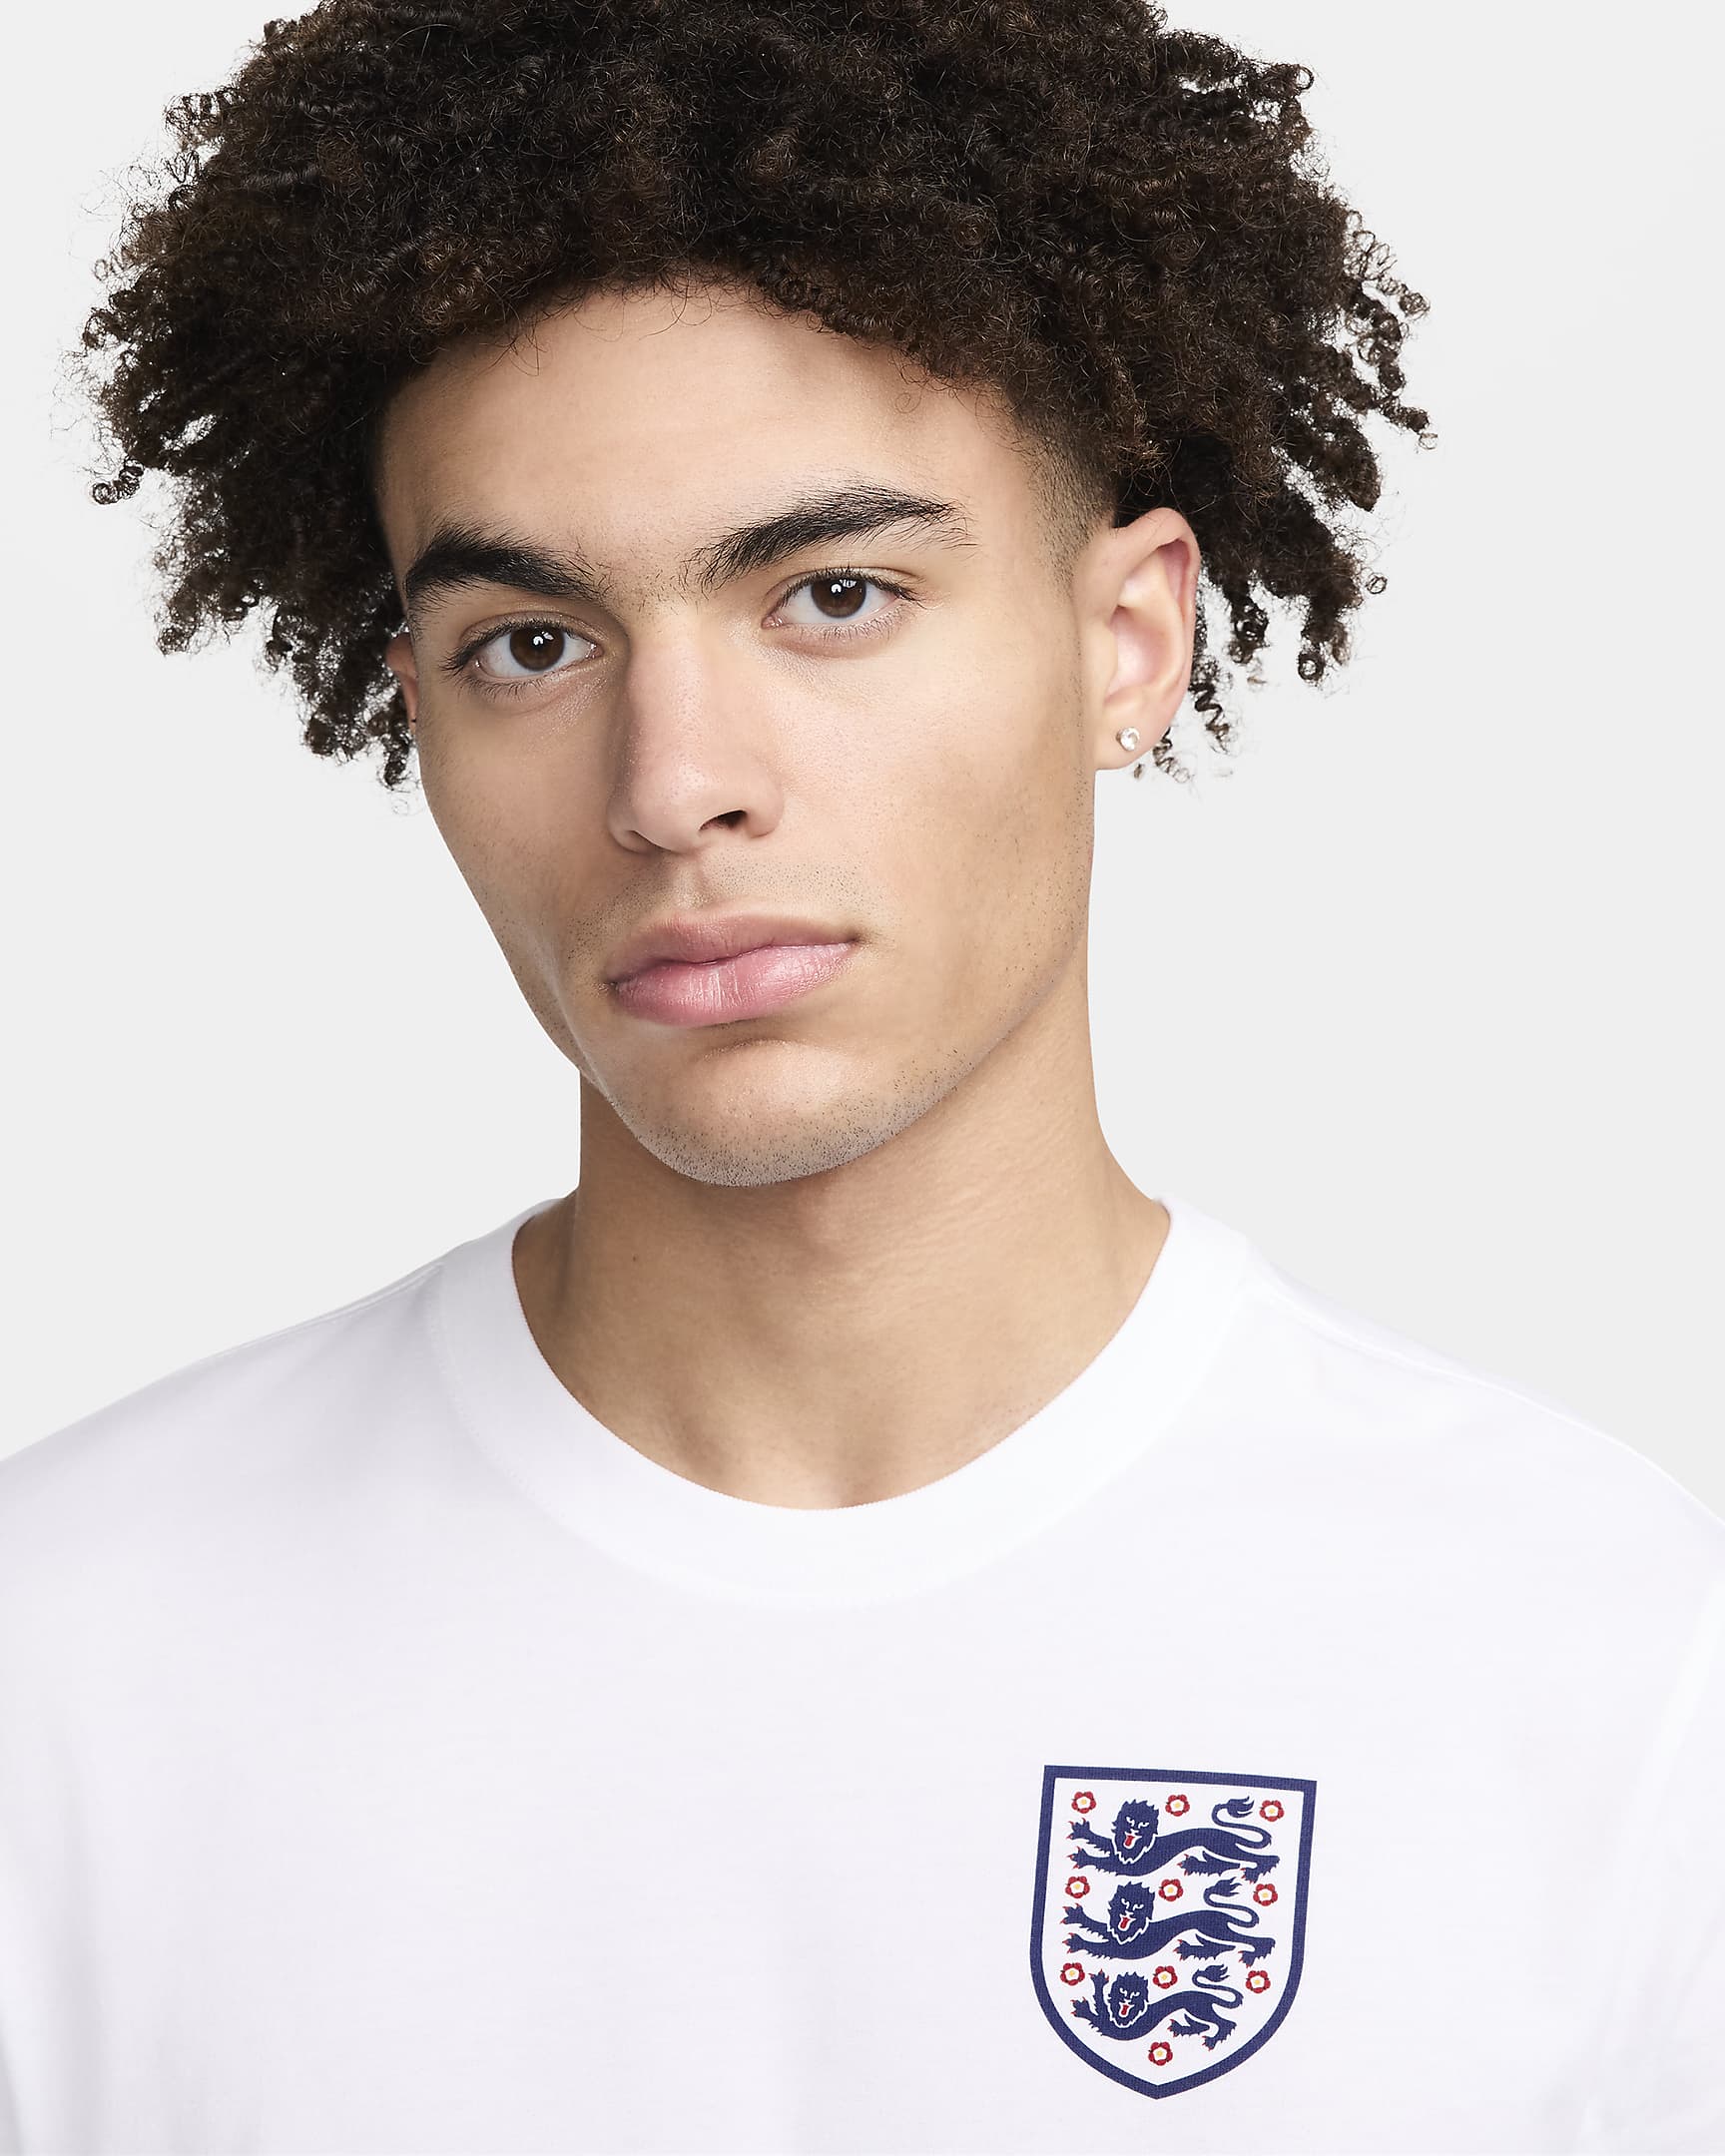 England Men's Nike Football T-Shirt. Nike HR